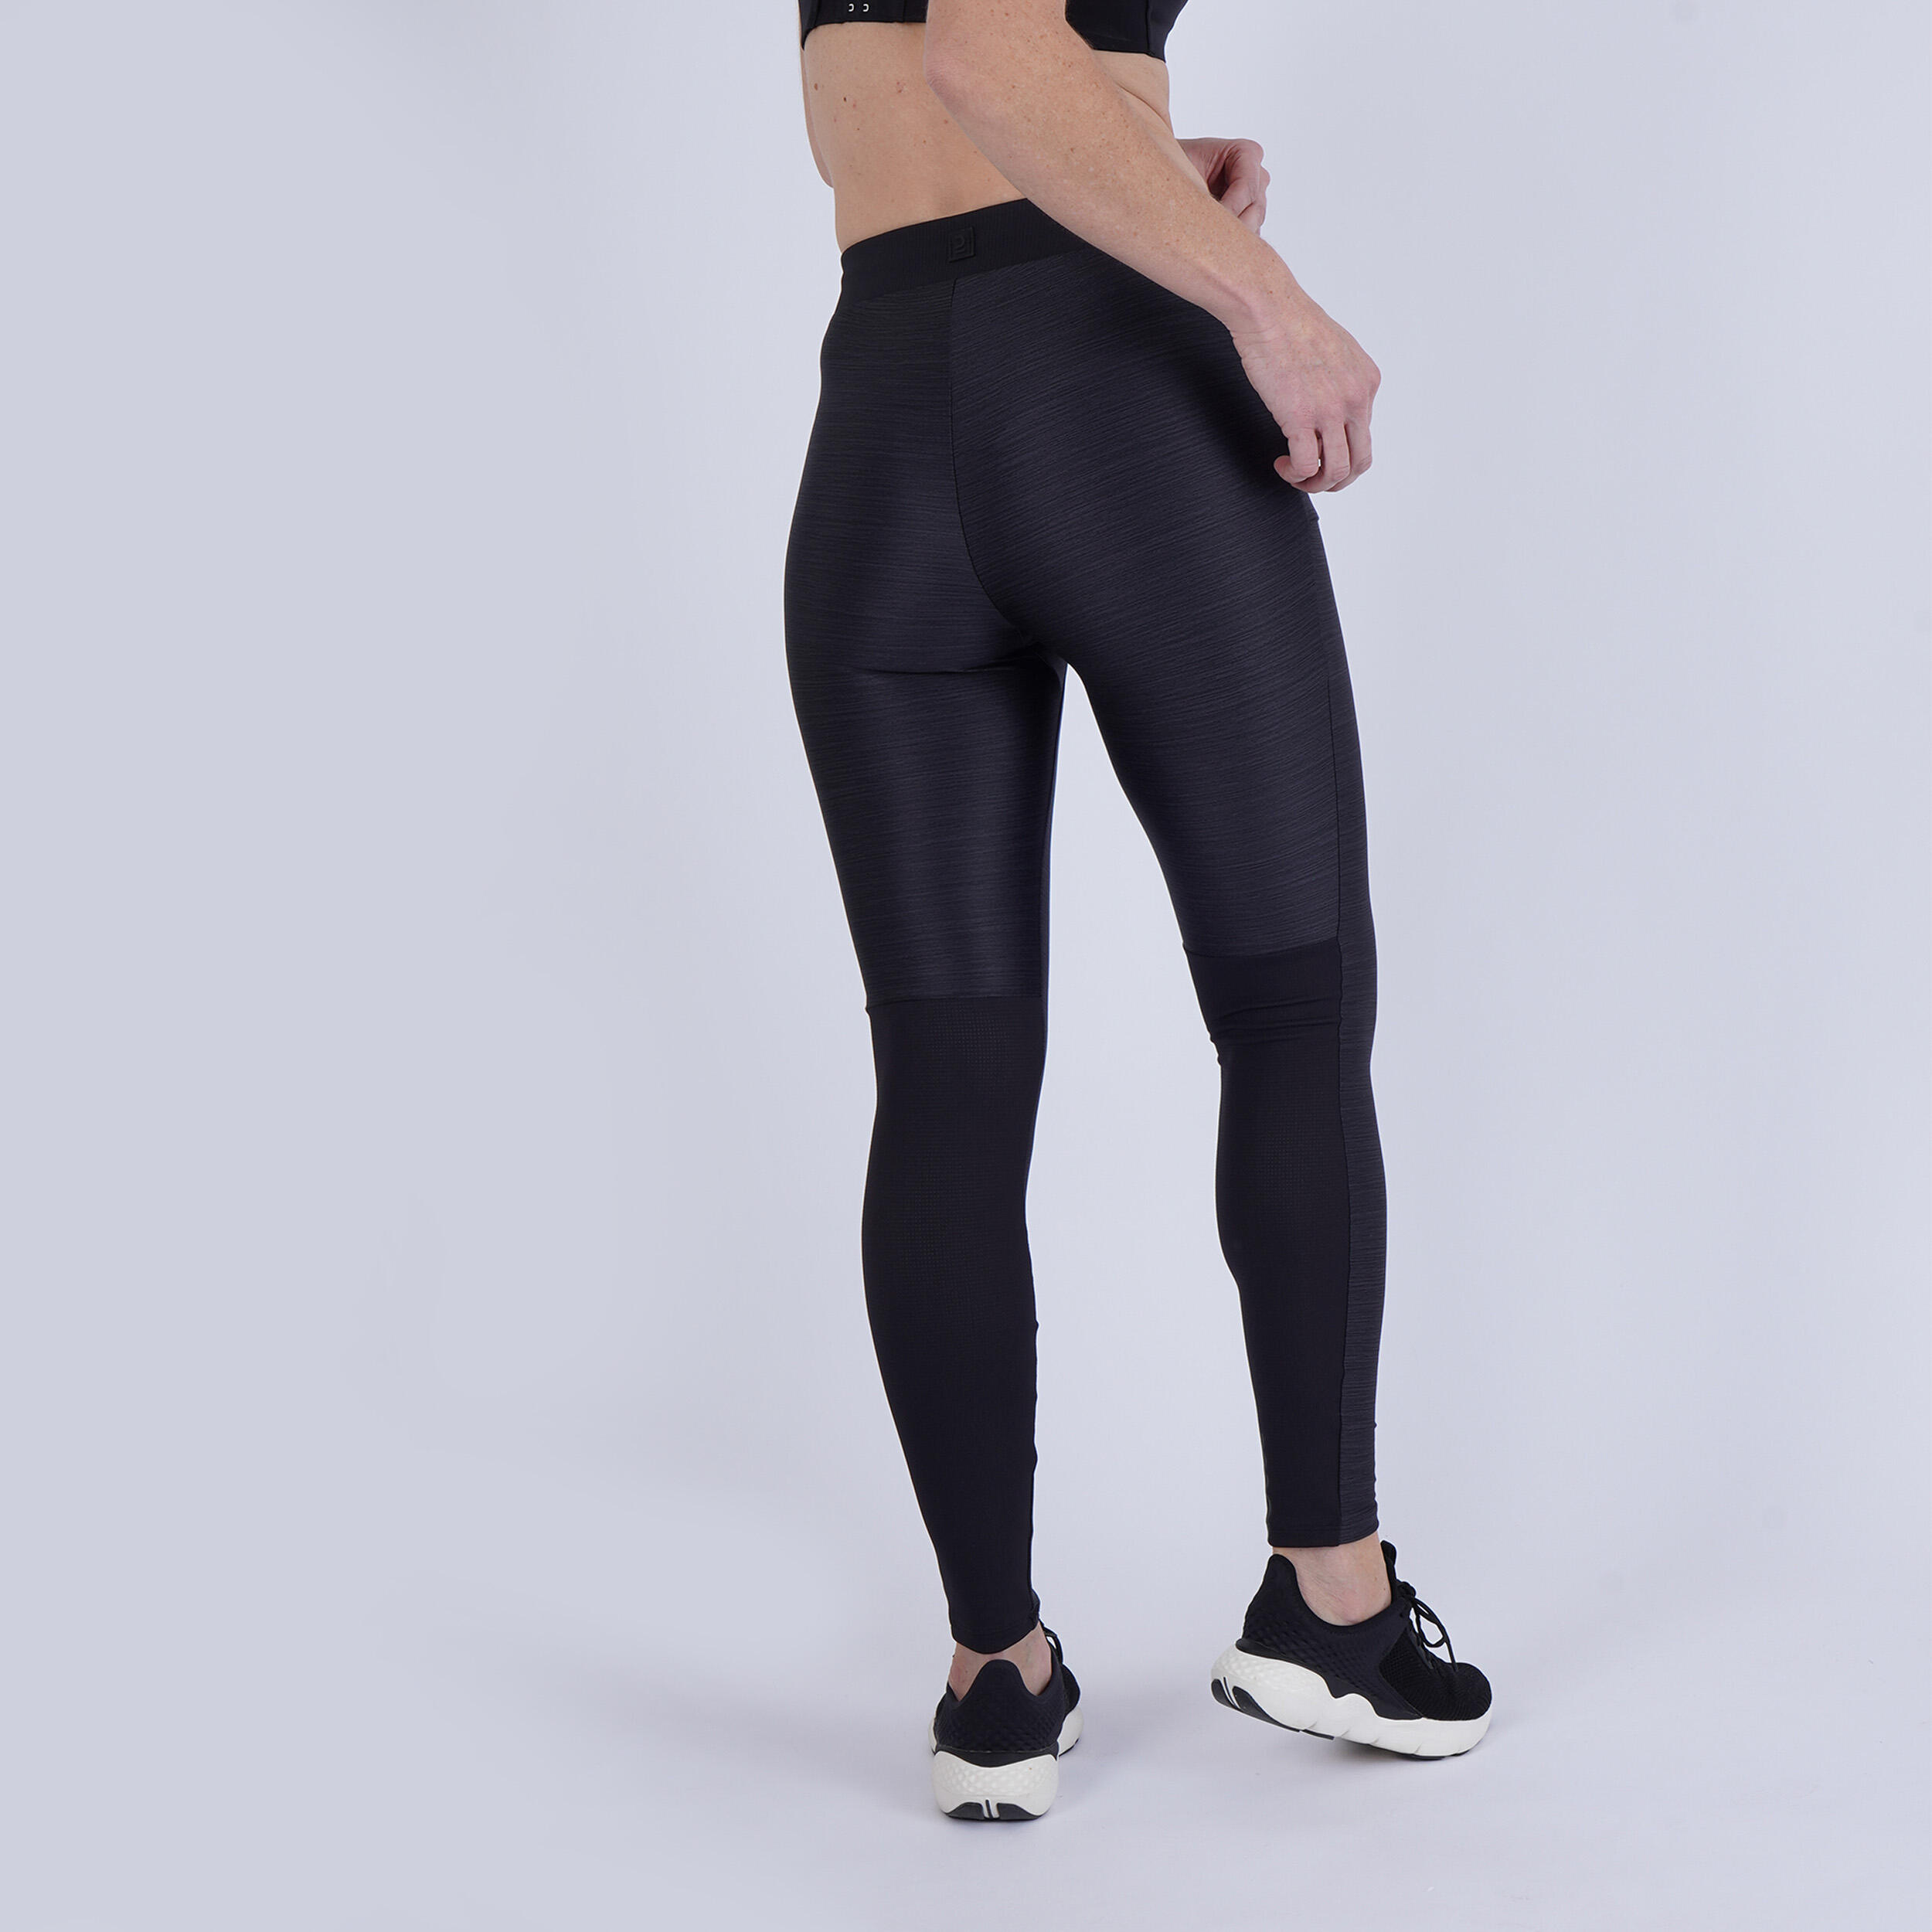 legging running respirant femme - run dry 500 noir chiné - kalenji